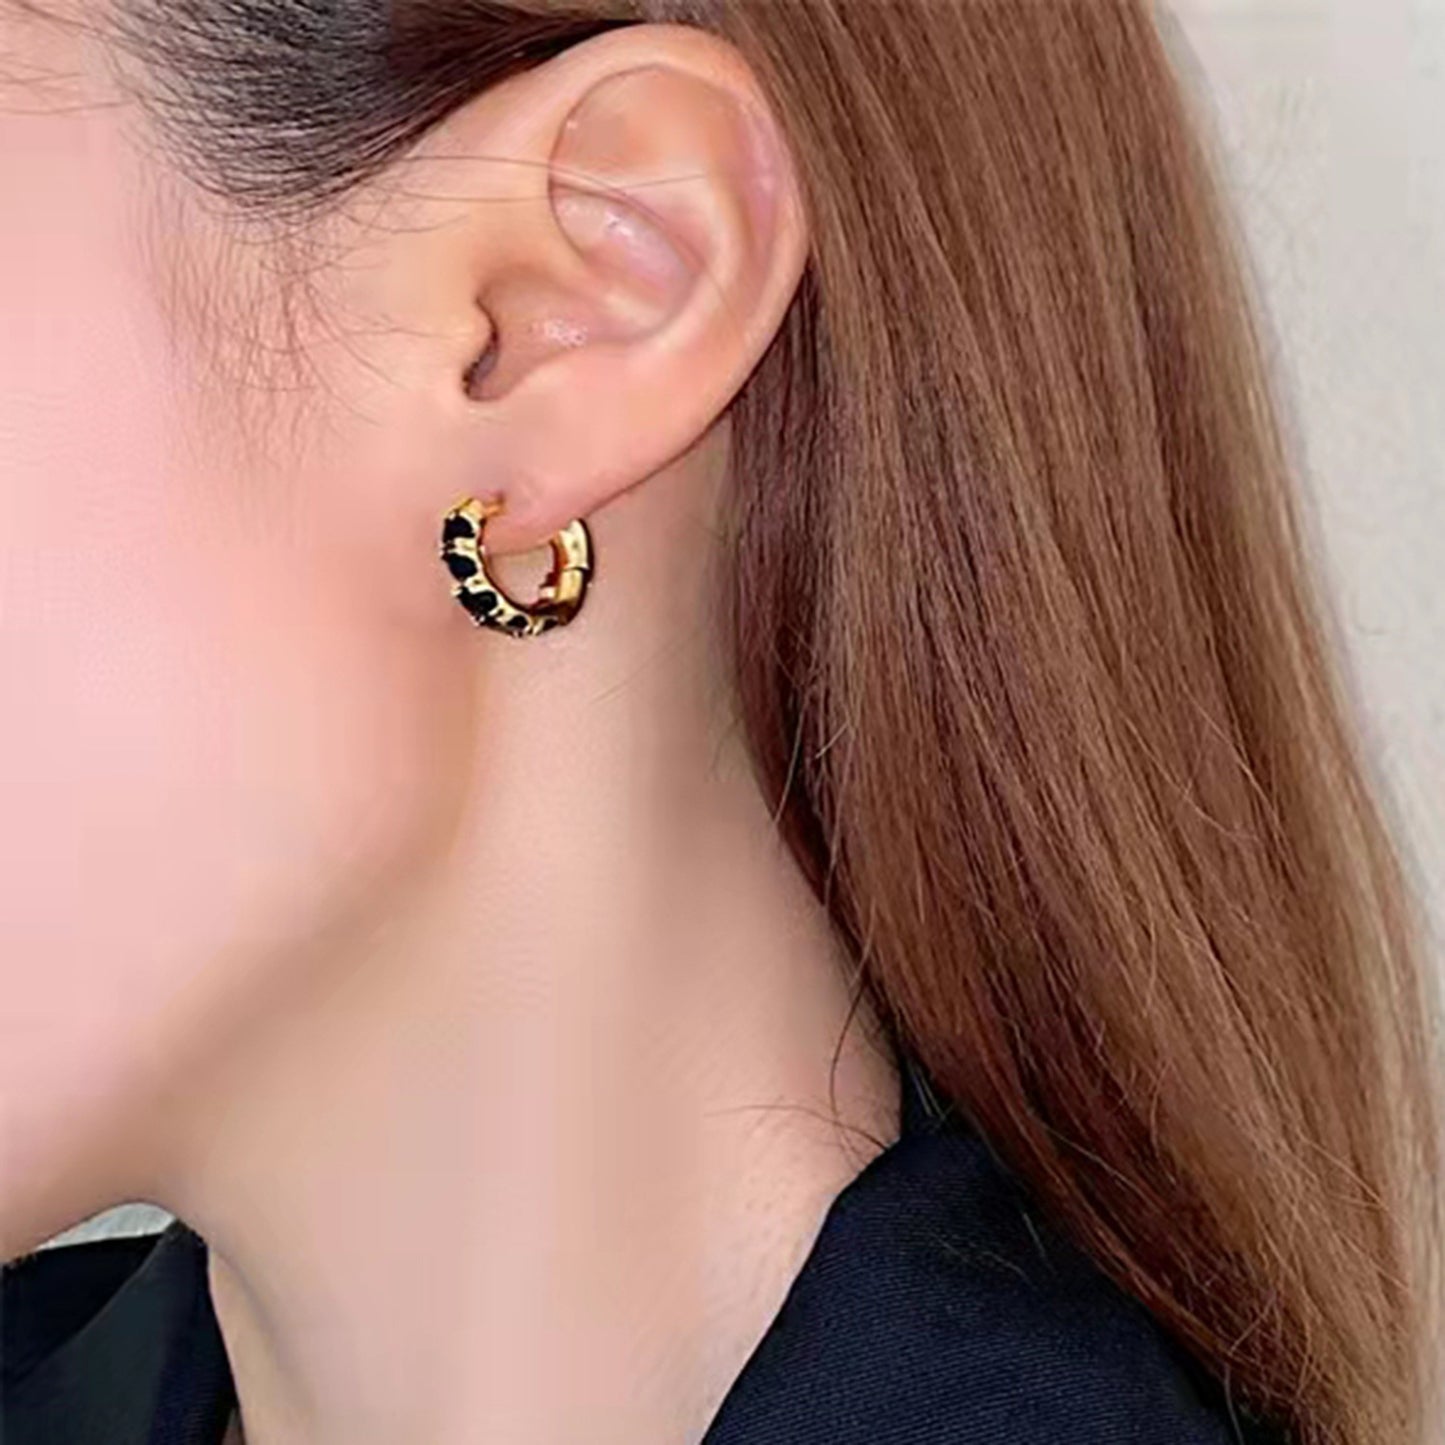 5pcs New 14K Gold-Plated Stainless Steel Earrings Round Zircon Pendant Women's Jewelry Earrings Pendant